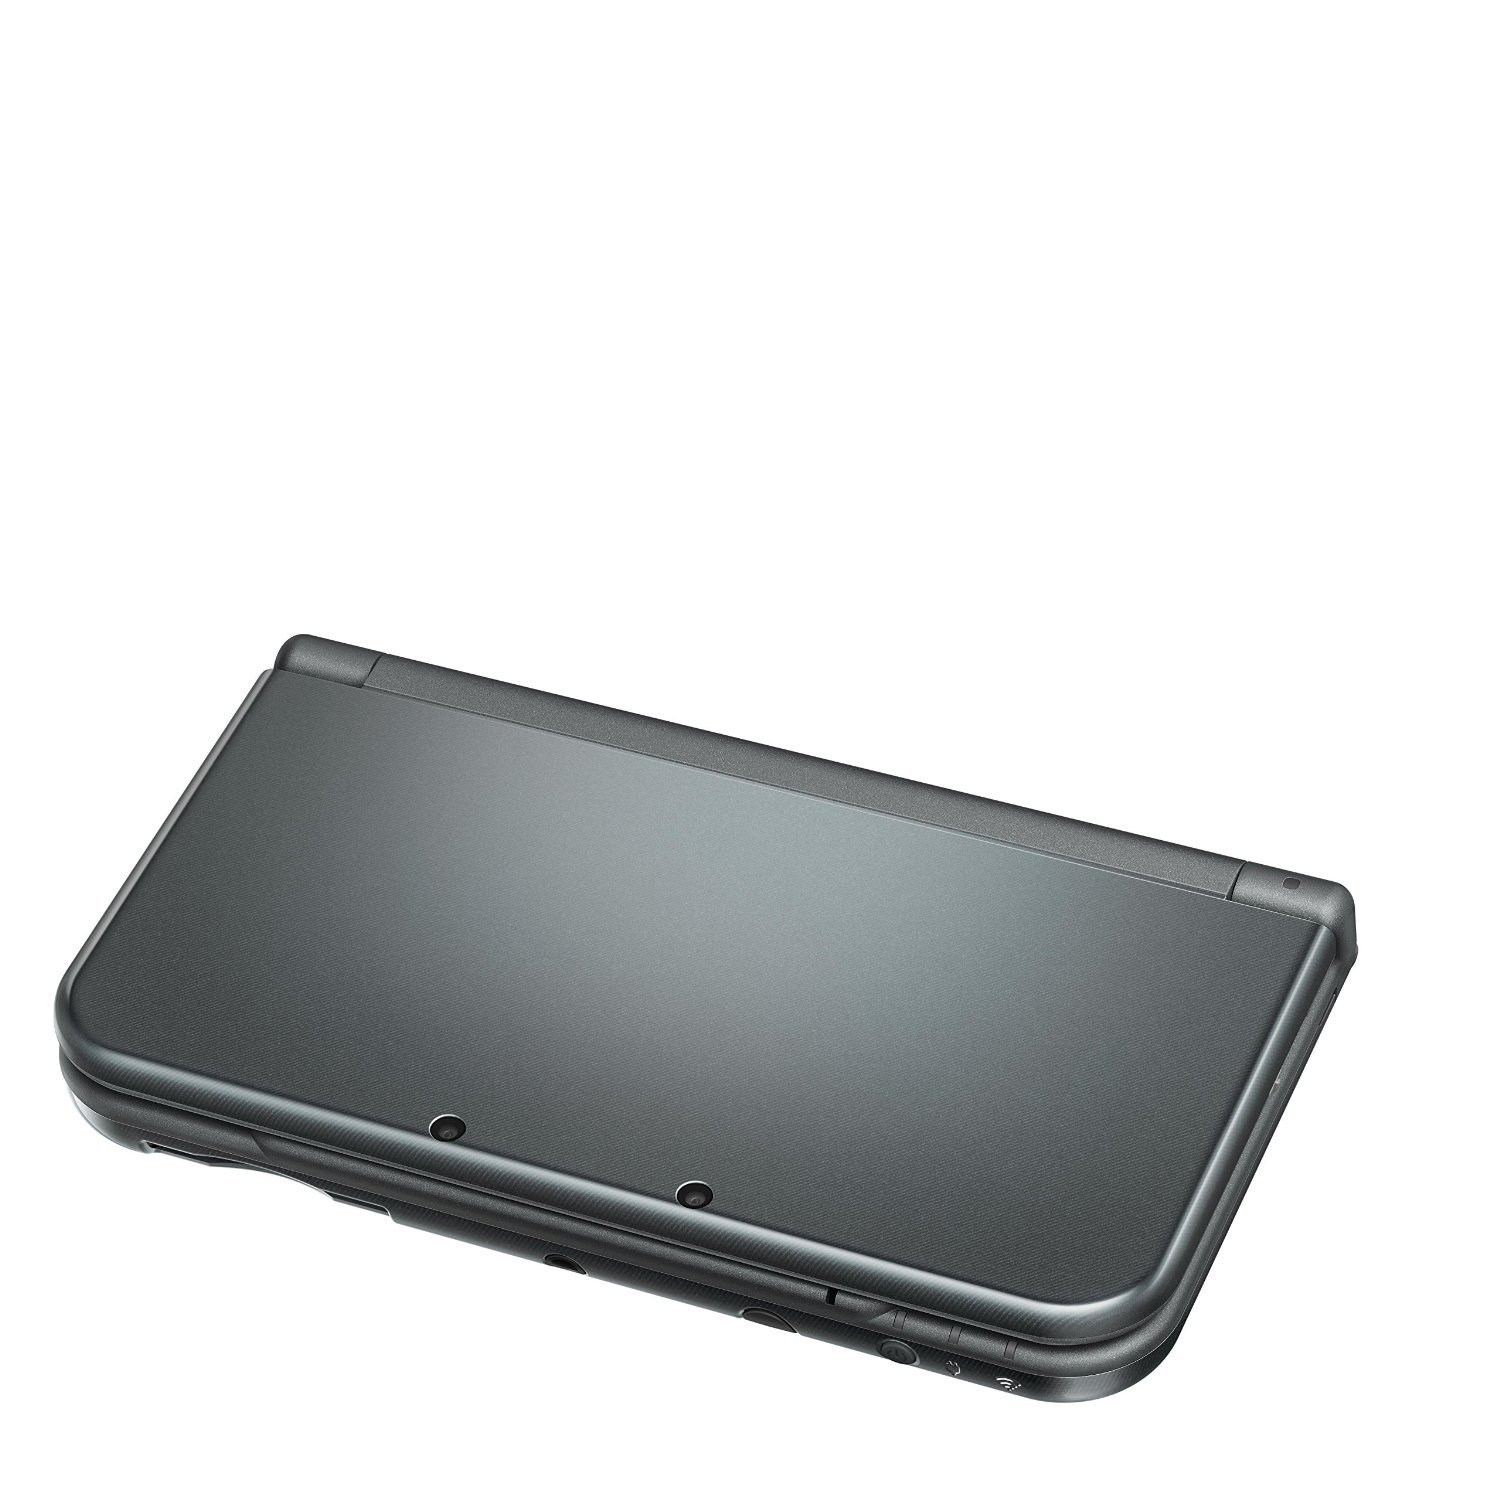 New 3DS XL (Metallic Black)